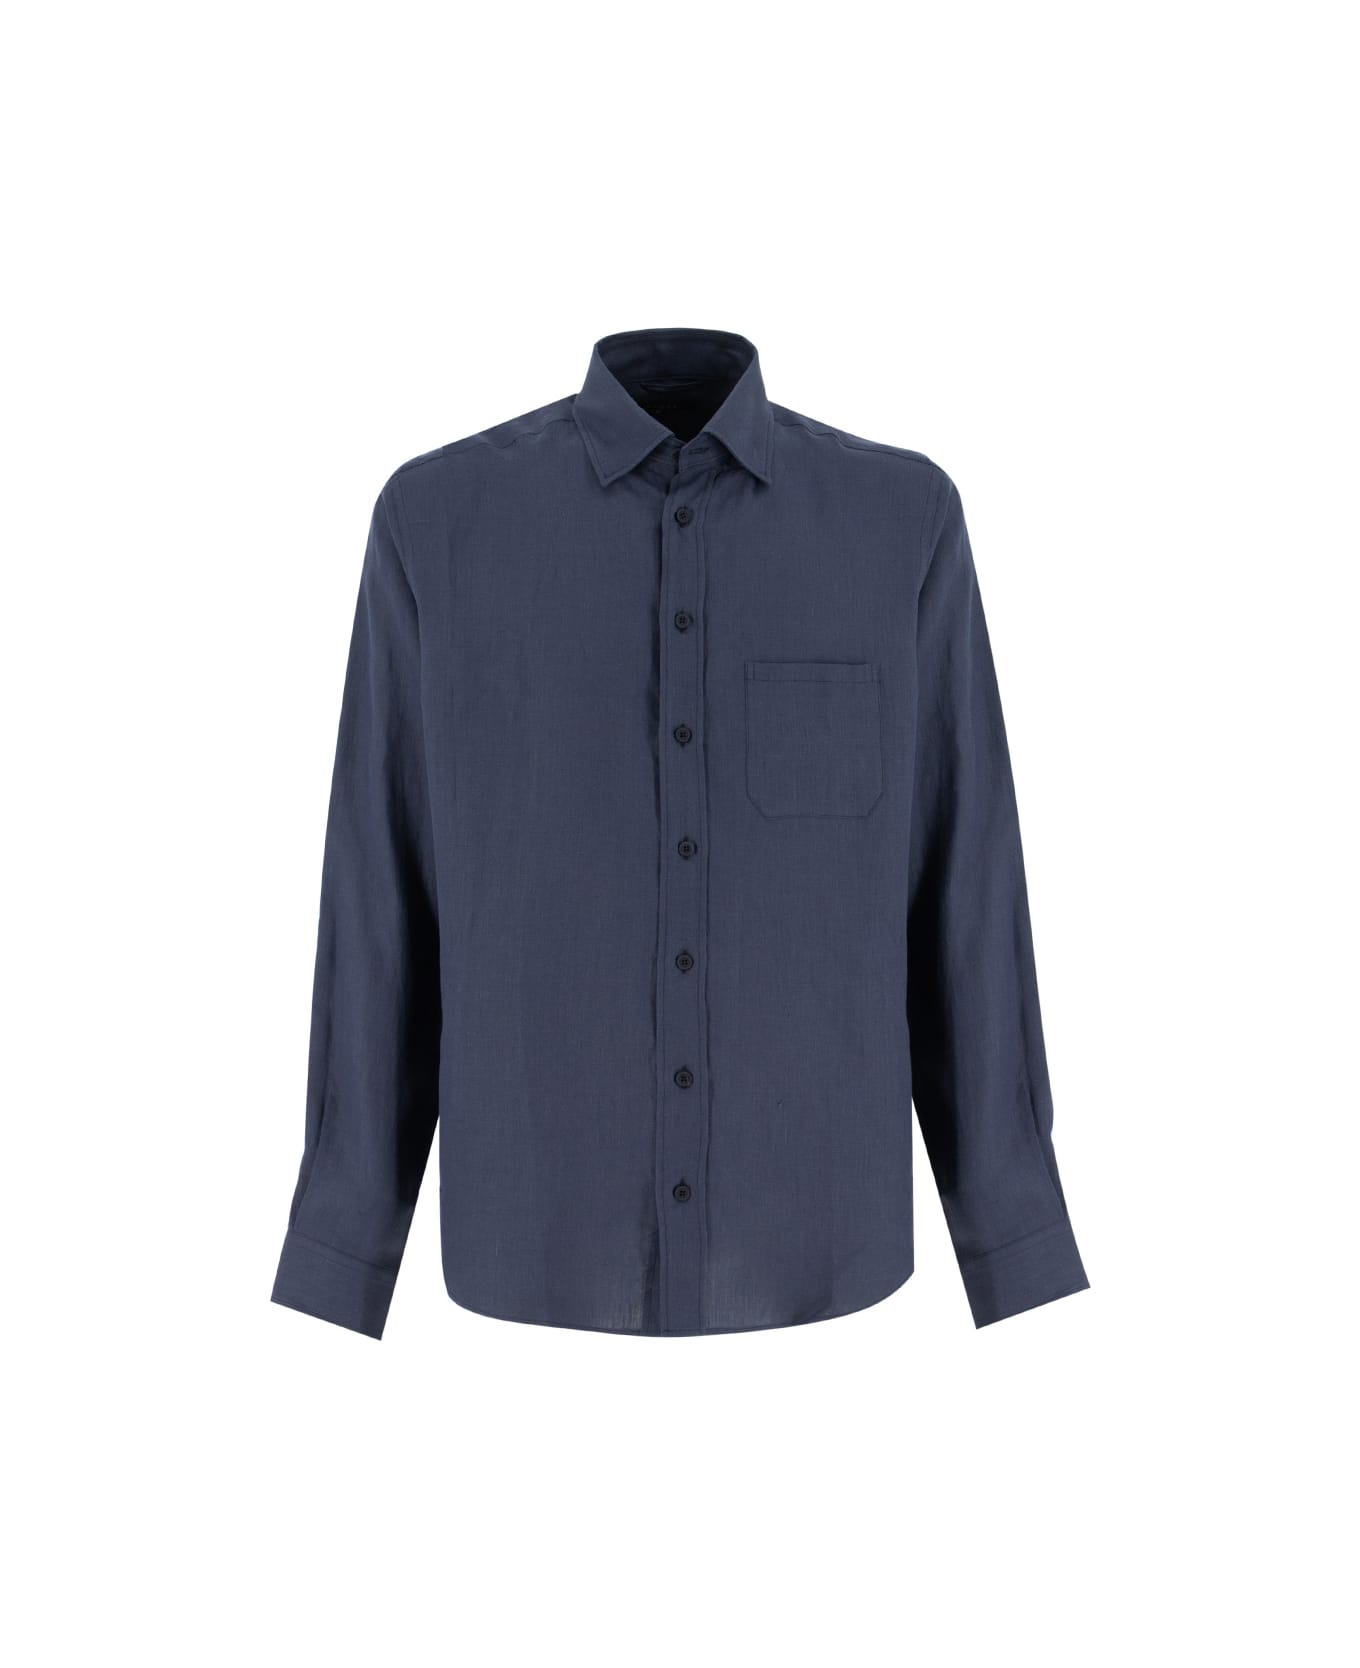 Sease Shirt - NAVY BLUE シャツ